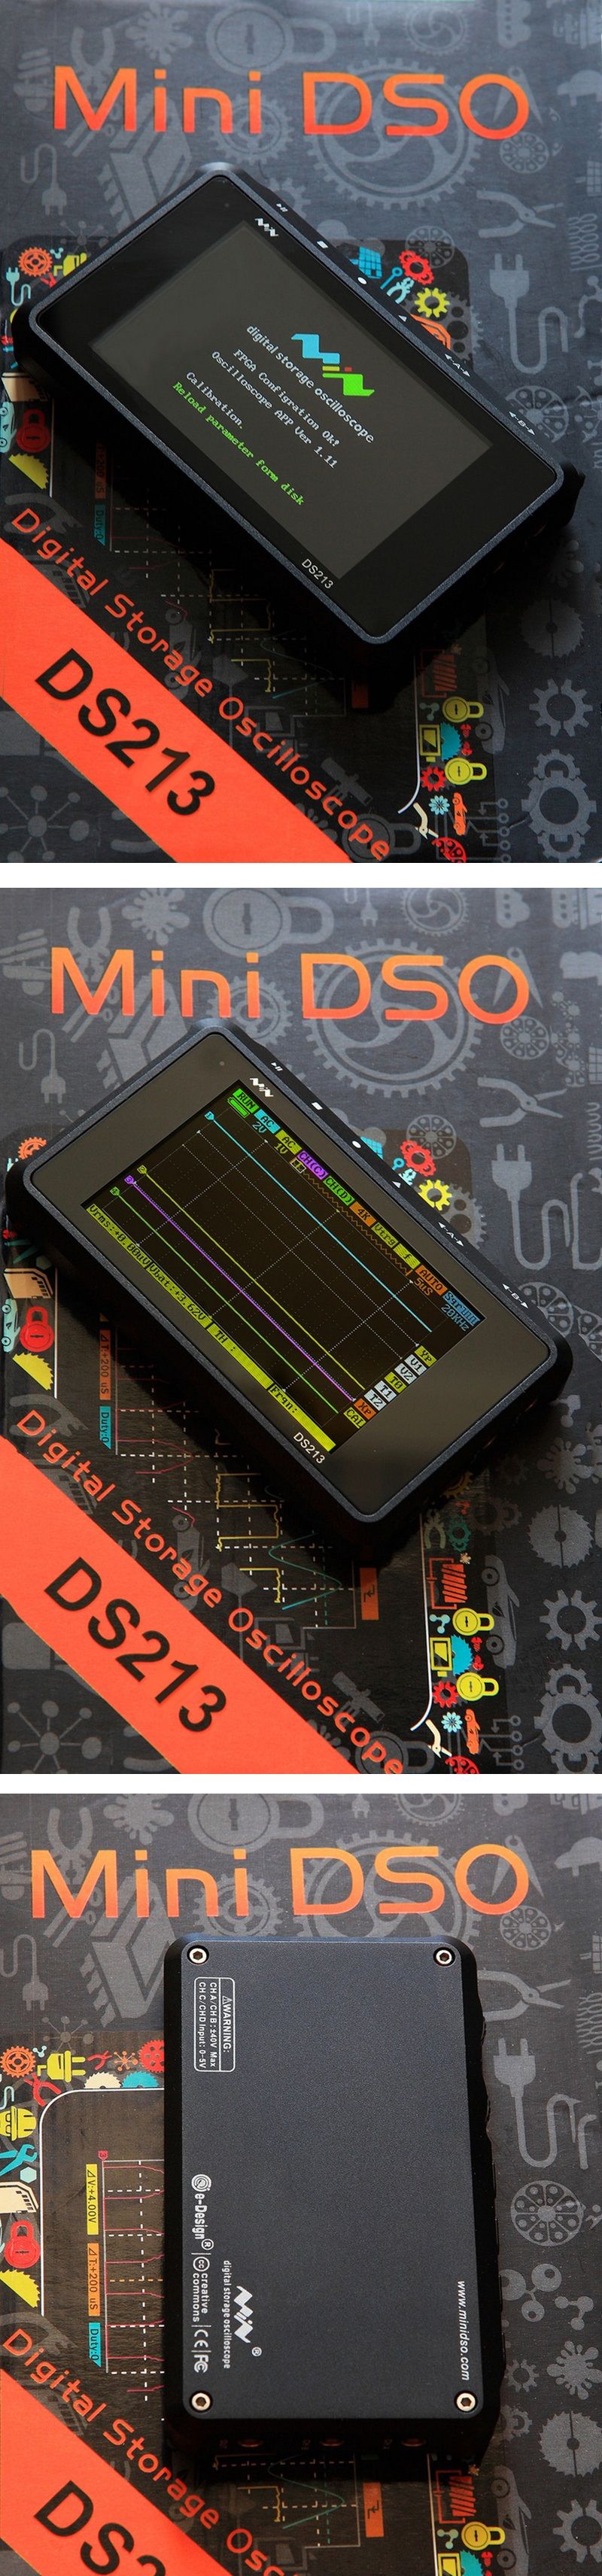 MINI-DS213-Digital-Storage-Oscilloscope-Portable-15MHz-Bandwidth-100MSas--Sampling-Rate-2-Analog-Cha-1412378